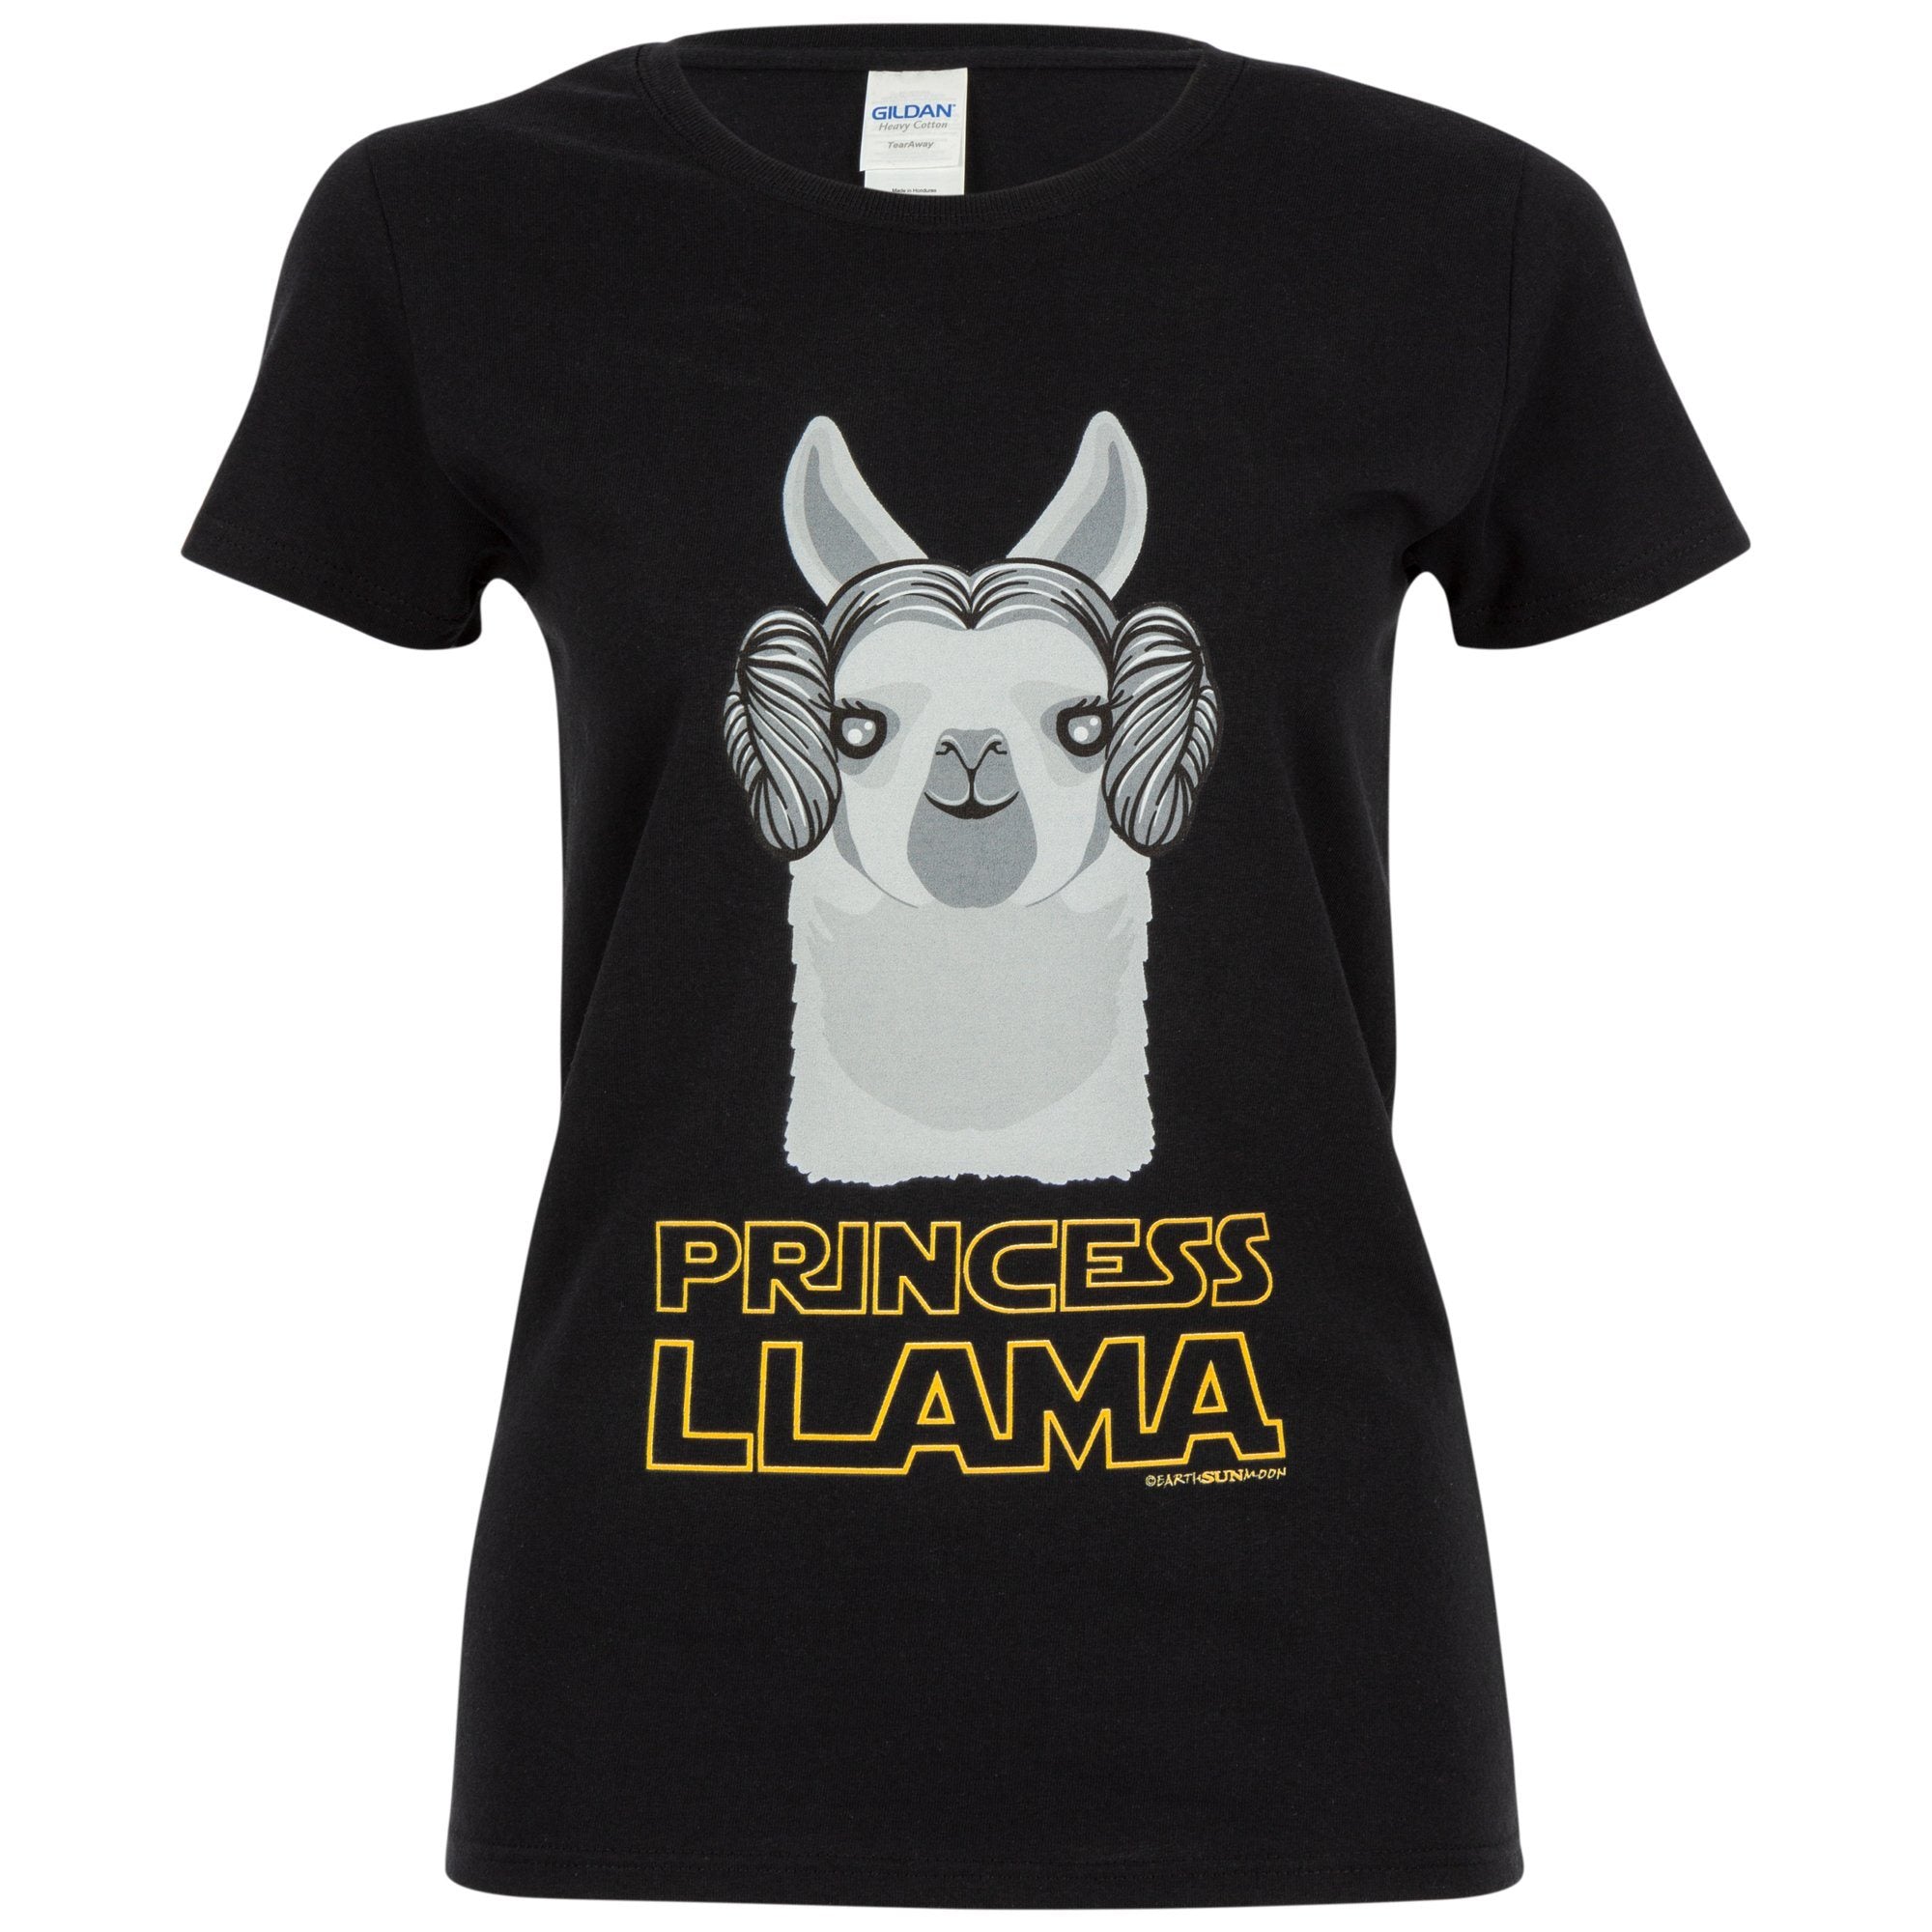 Princess Llama Tee - XXL